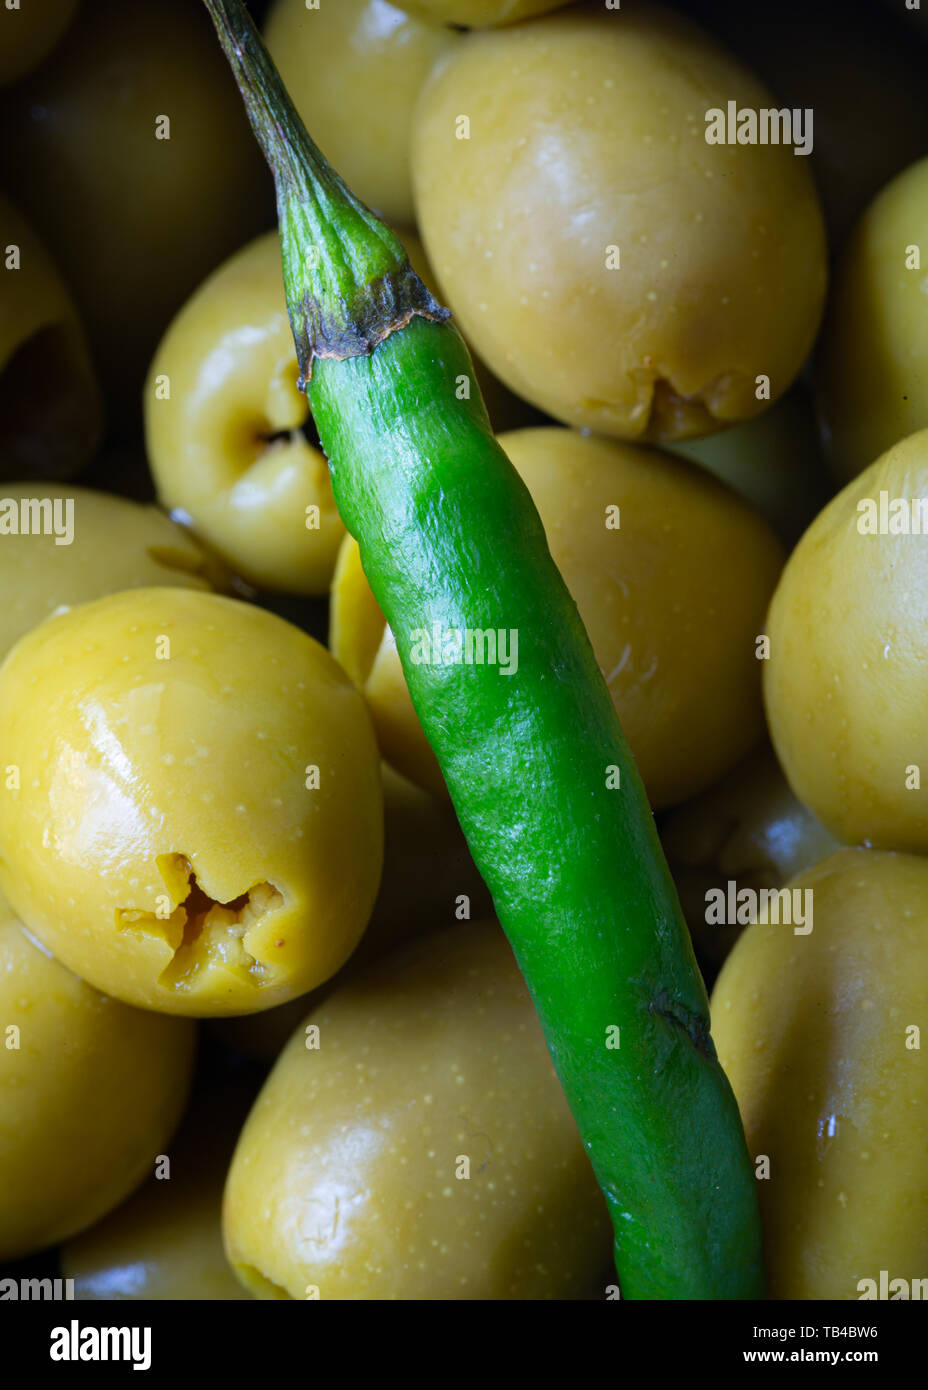 green chilli on green olives macro photo, food photo close up Stock Photo